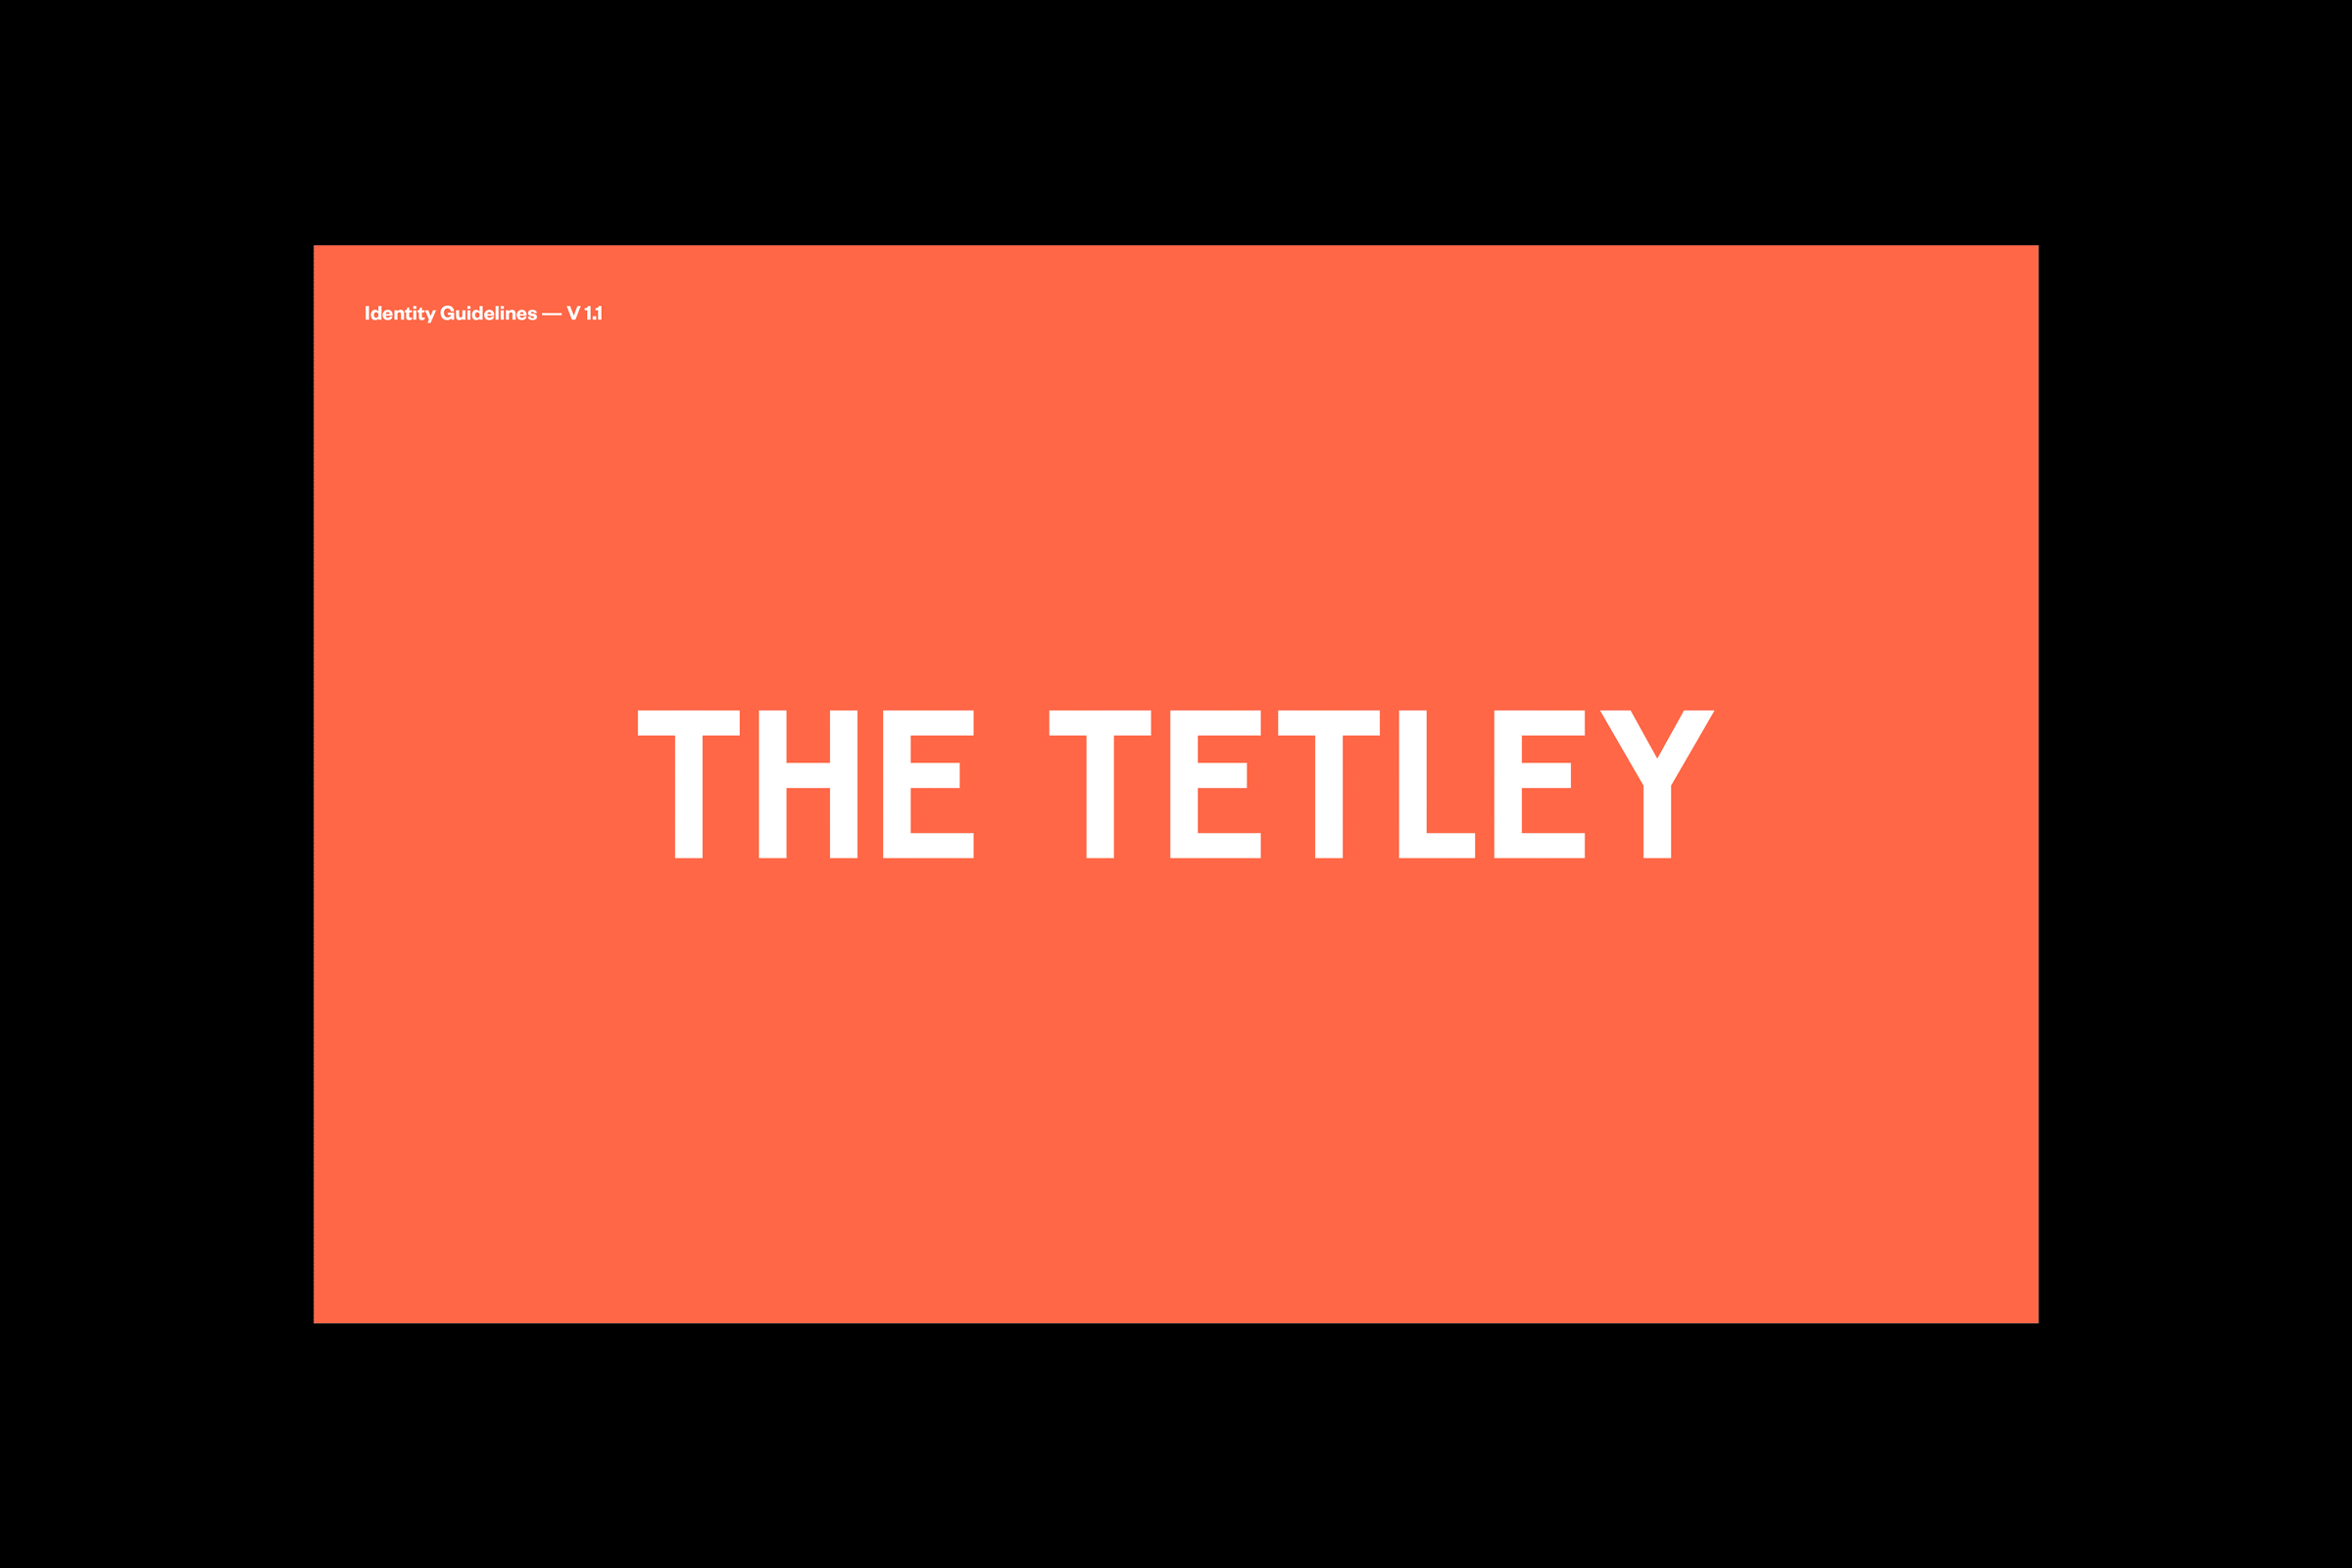 saul studio — The Tetley